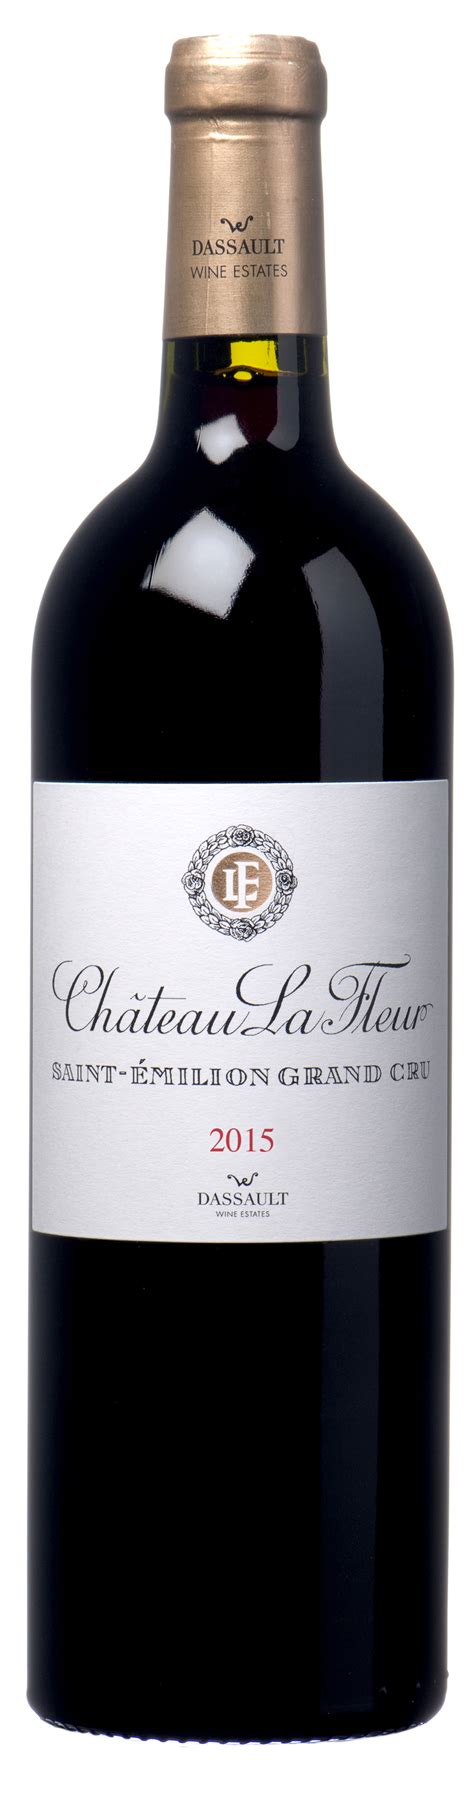 Château La Fleur 2015 Dassault Wine Estates